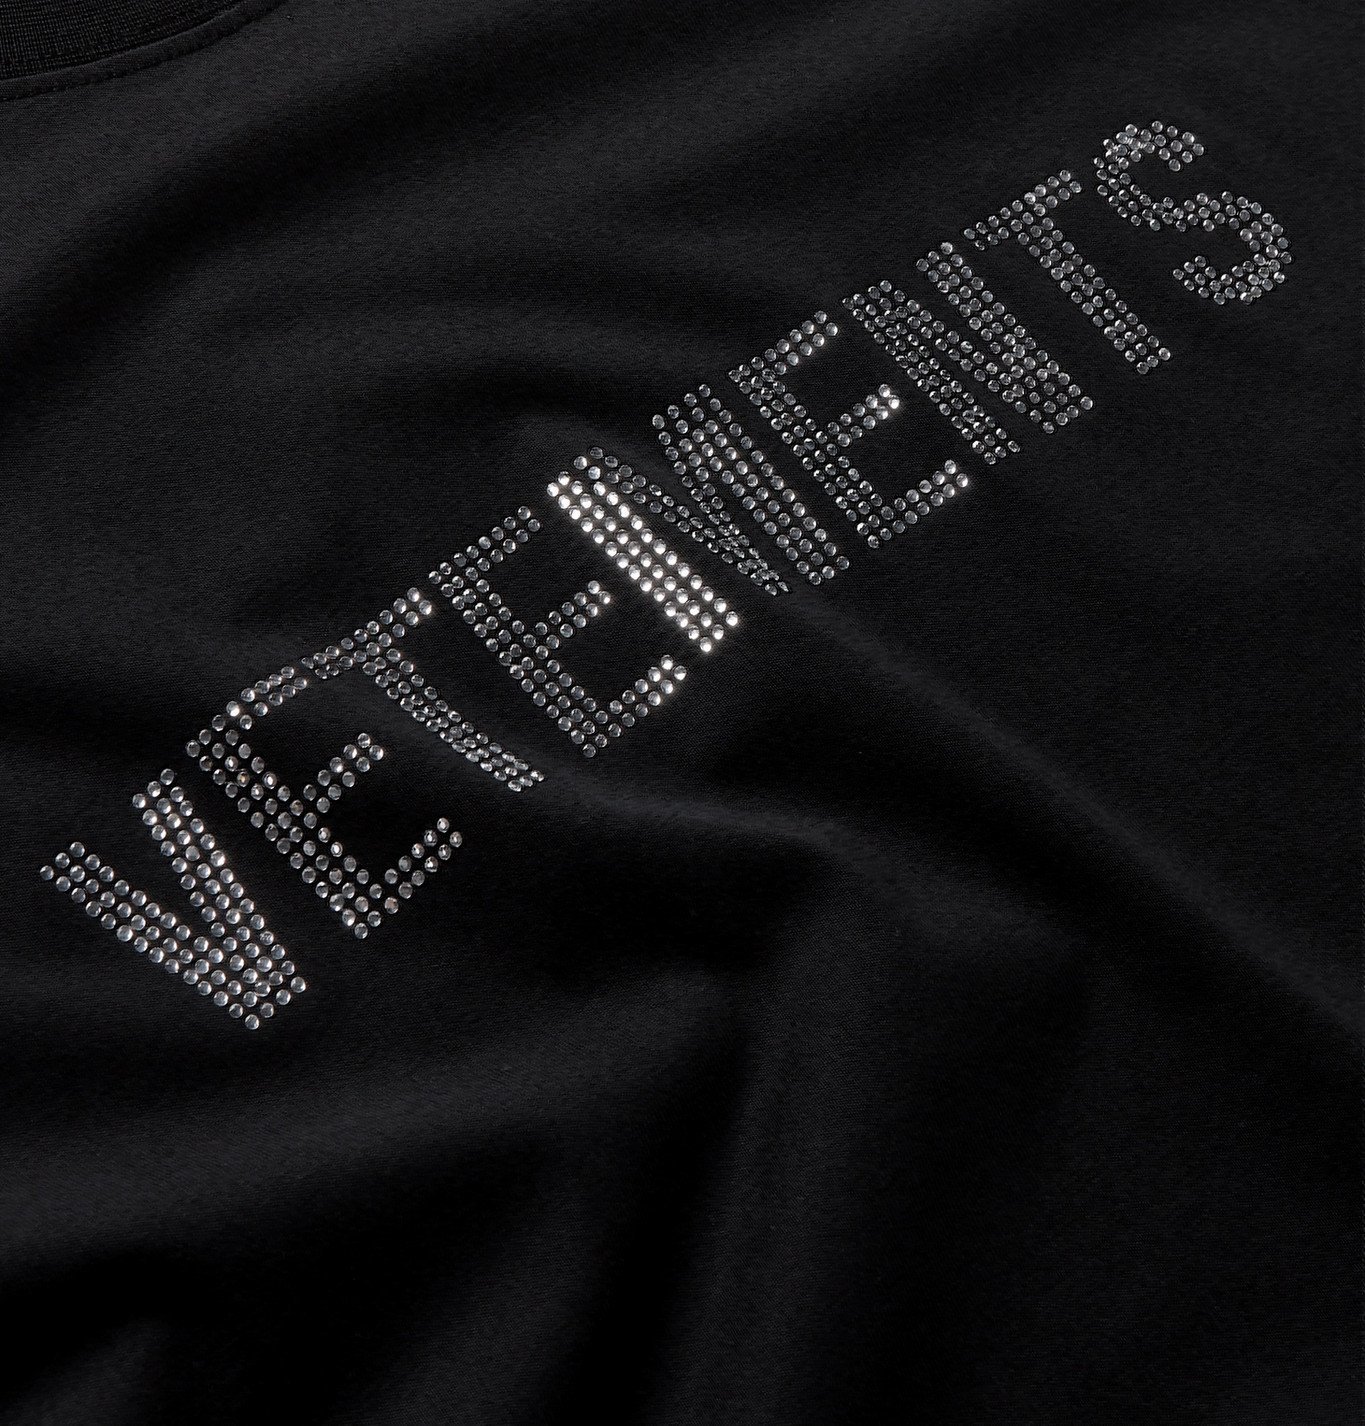 Vetements - Oversized Crystal-Embellished Cotton-Jersey T-Shirt 